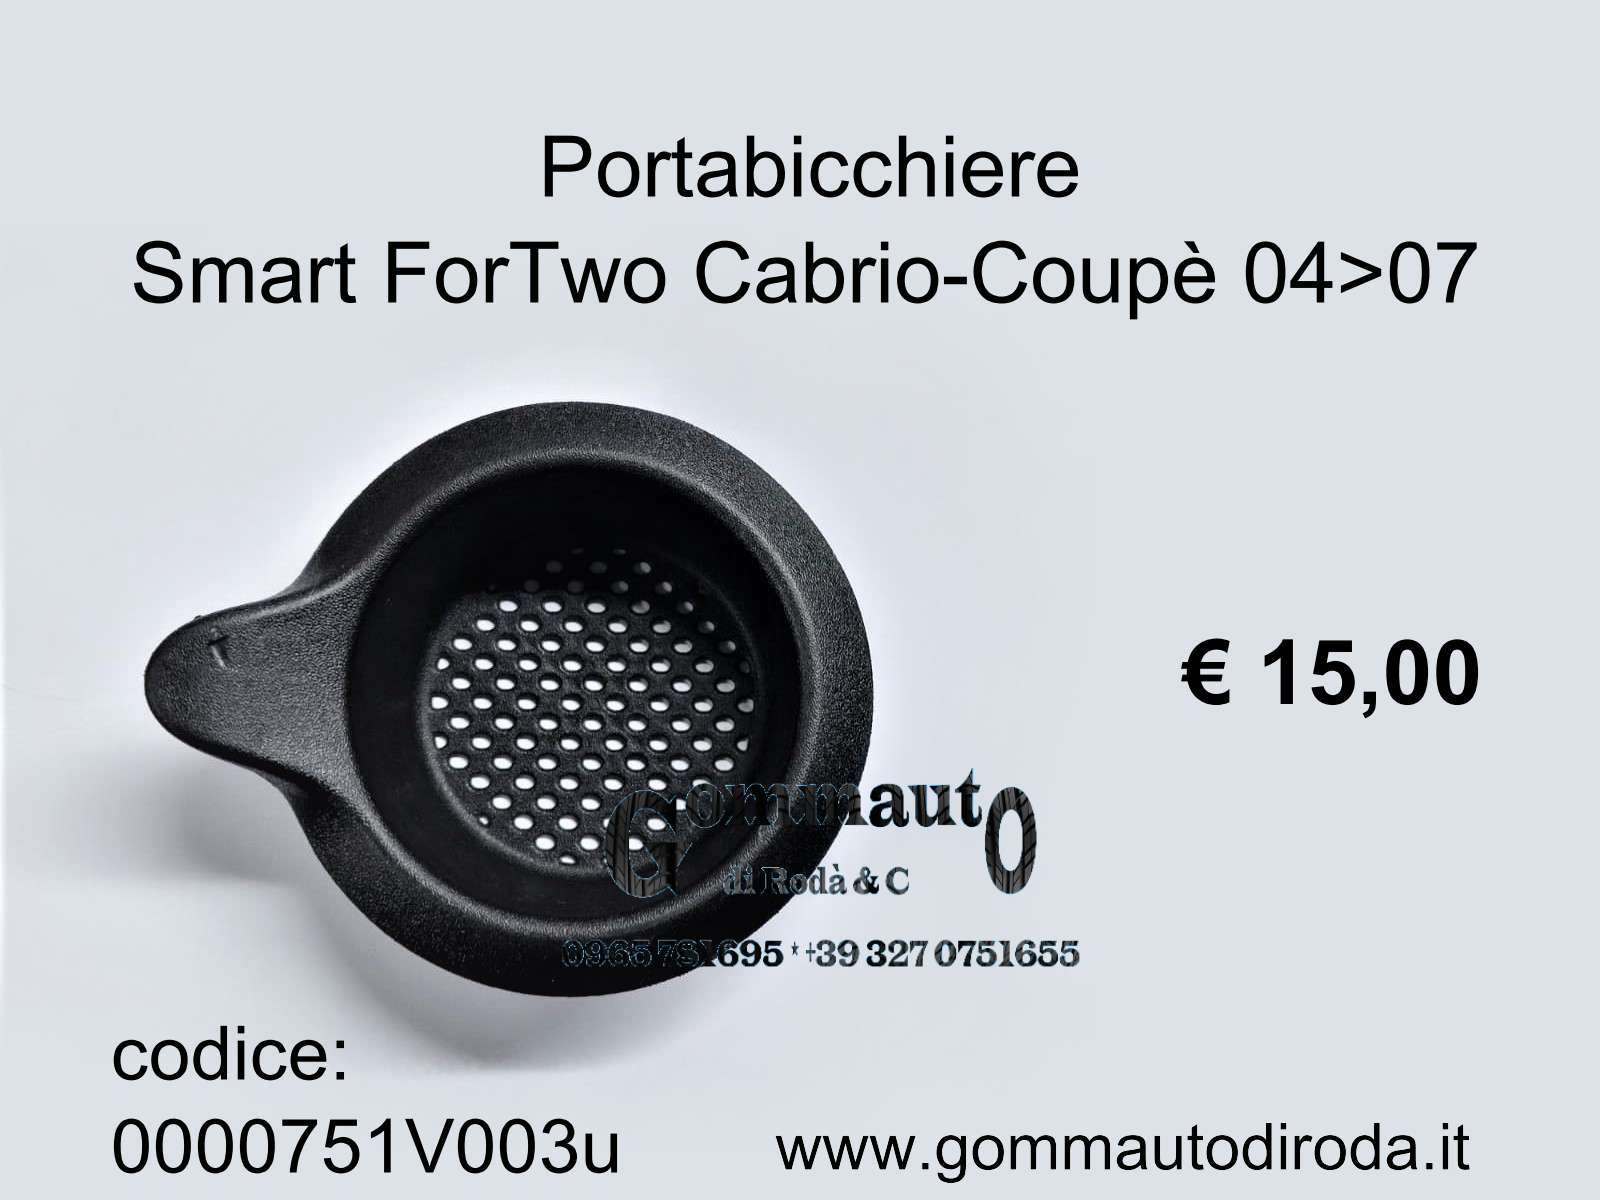 https://www.gommautodiroda.it/wp-content/uploads/2022/04/Smart-ForTwo-Cabrio-Coupe-04-07-Portabicchiere-0000751V003.jpg